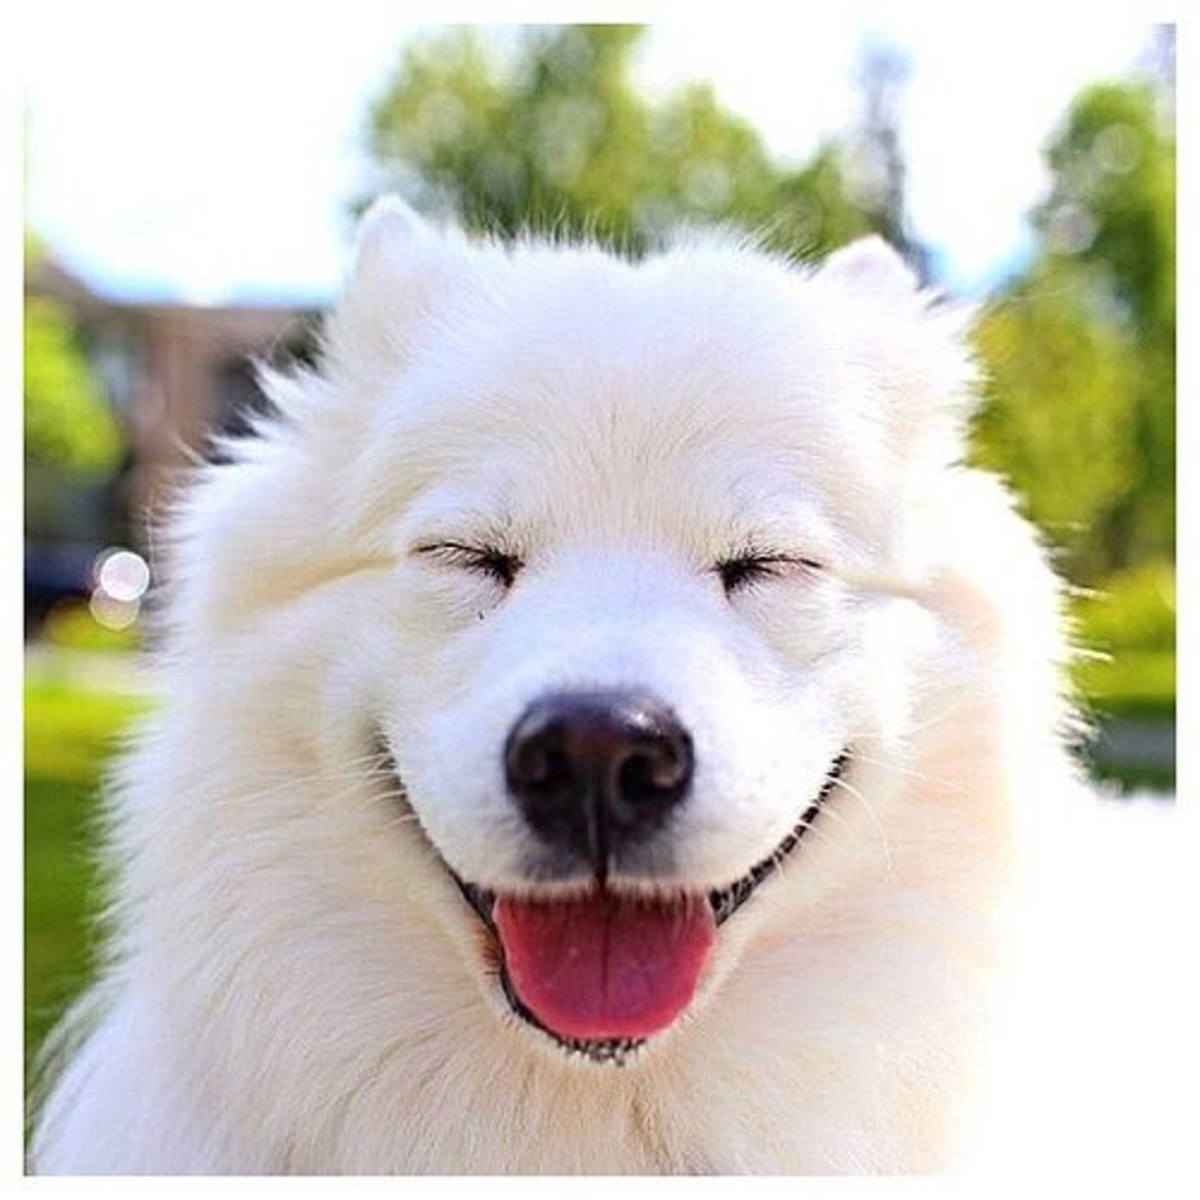 A smiley dog